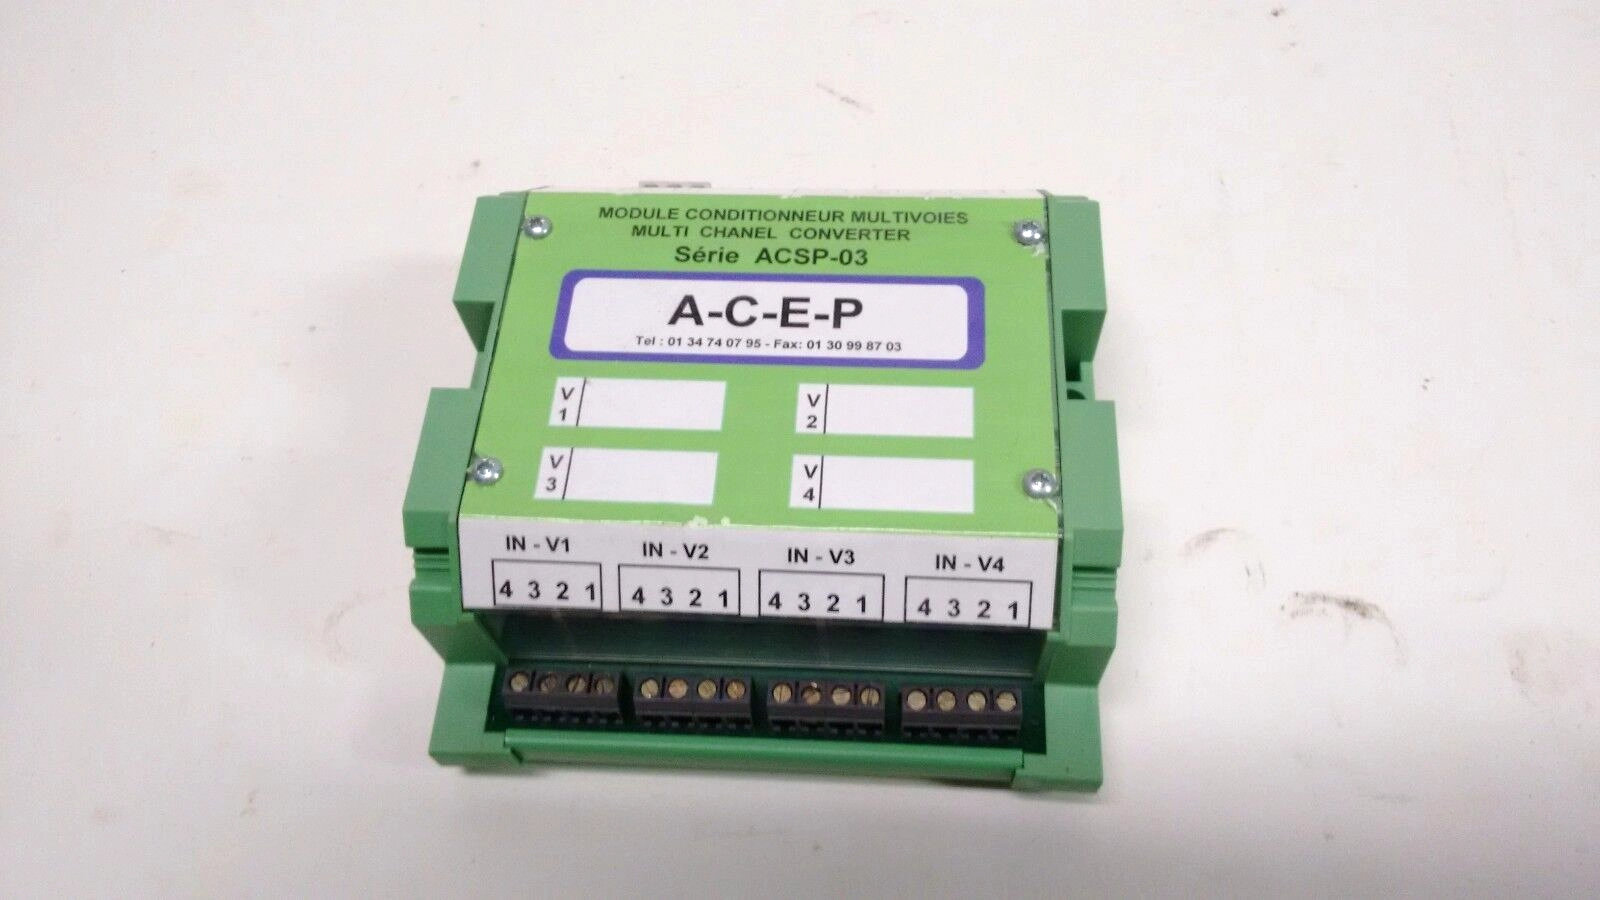 A-C-E-P Series ACSP-03 Multi Chanel Converter